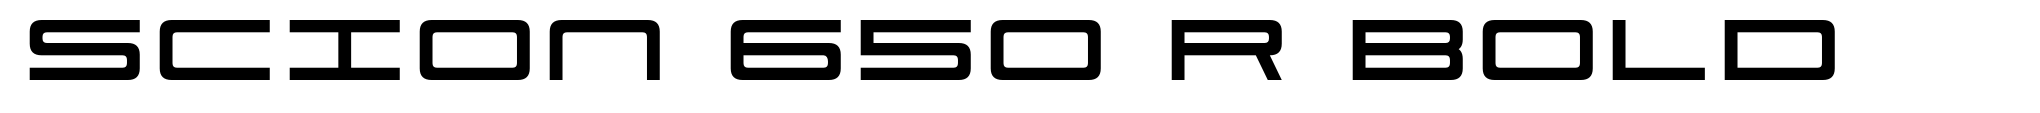 Scion 650 R Bold image